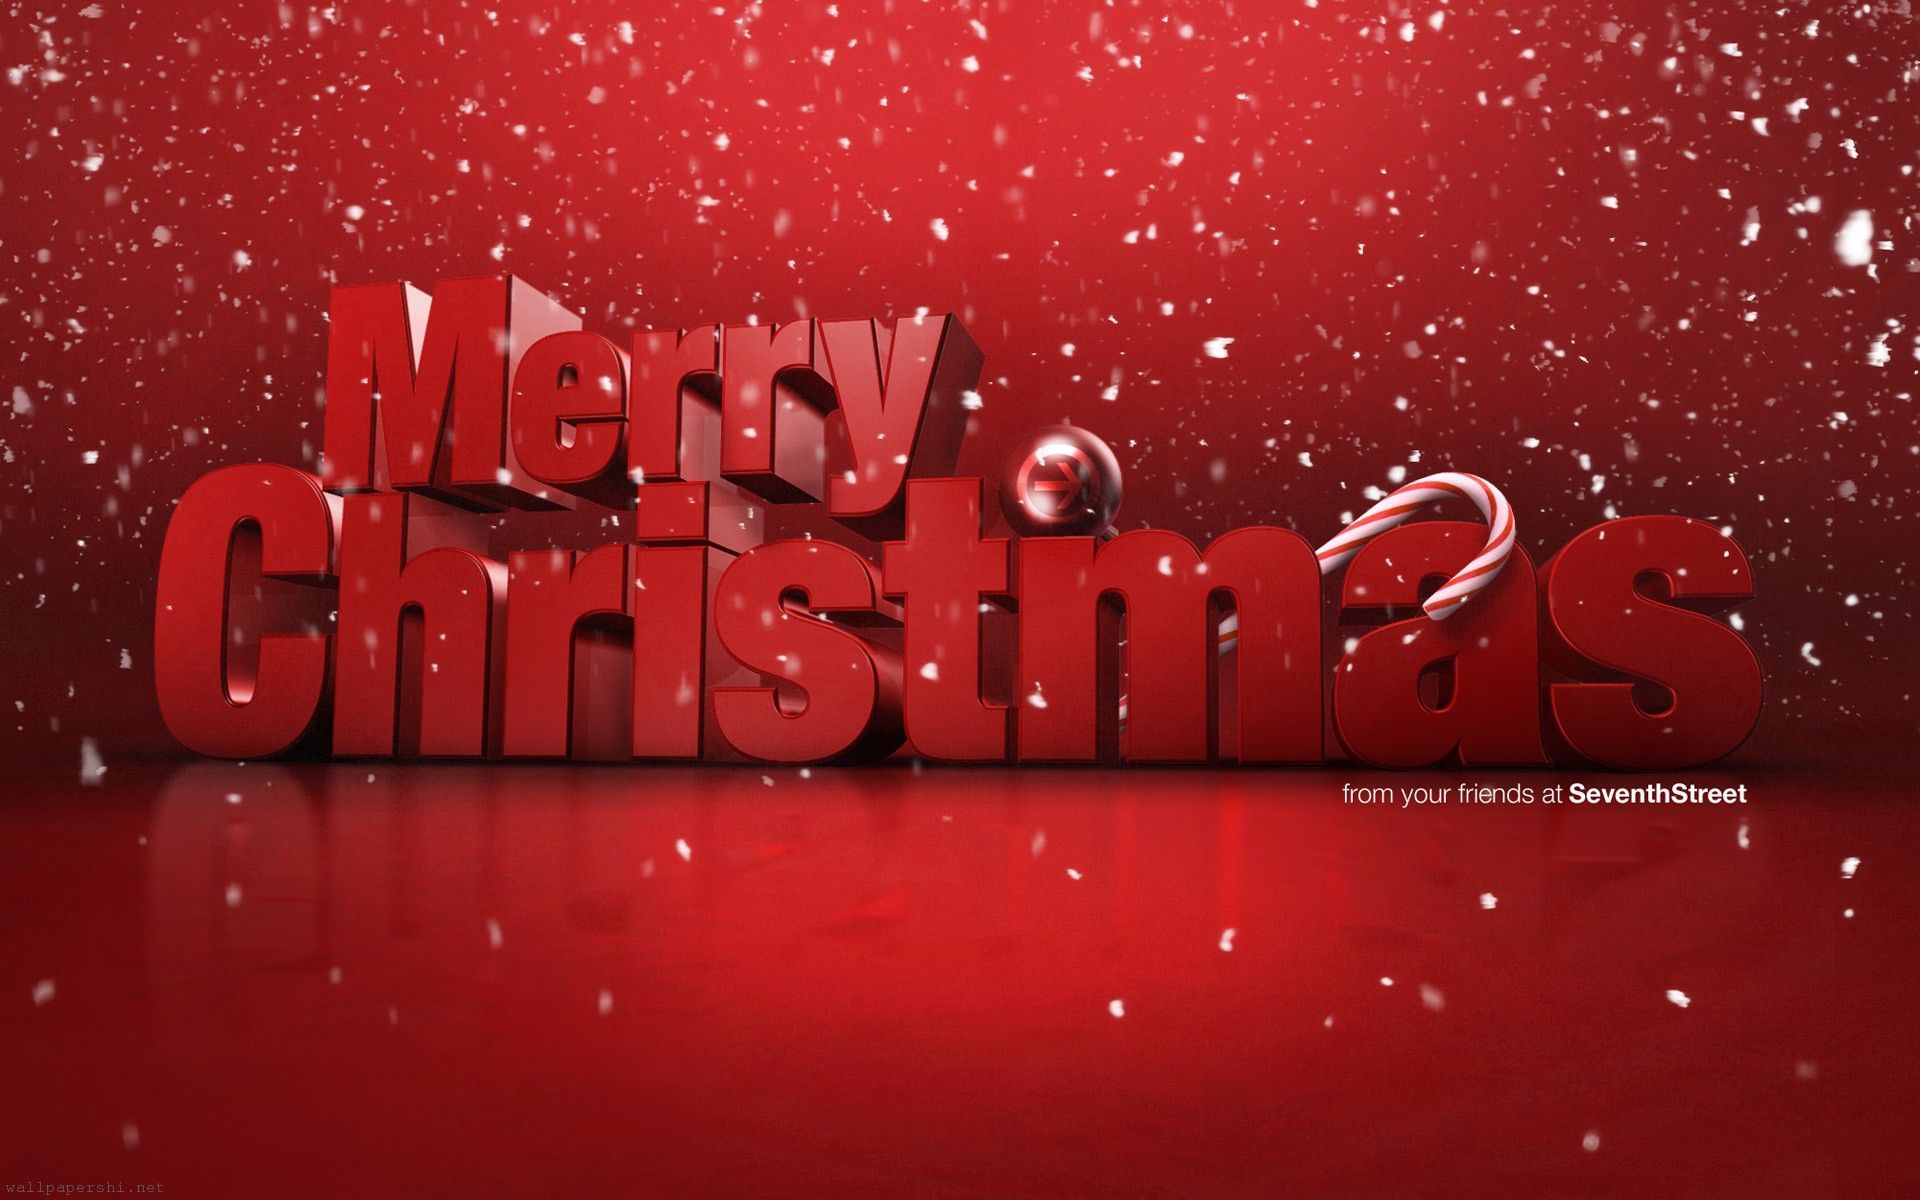 Facebook Christmas Cover wallpaper. Christmas desktop wallpaper, Merry christmas wallpaper, Merry christmas card greetings